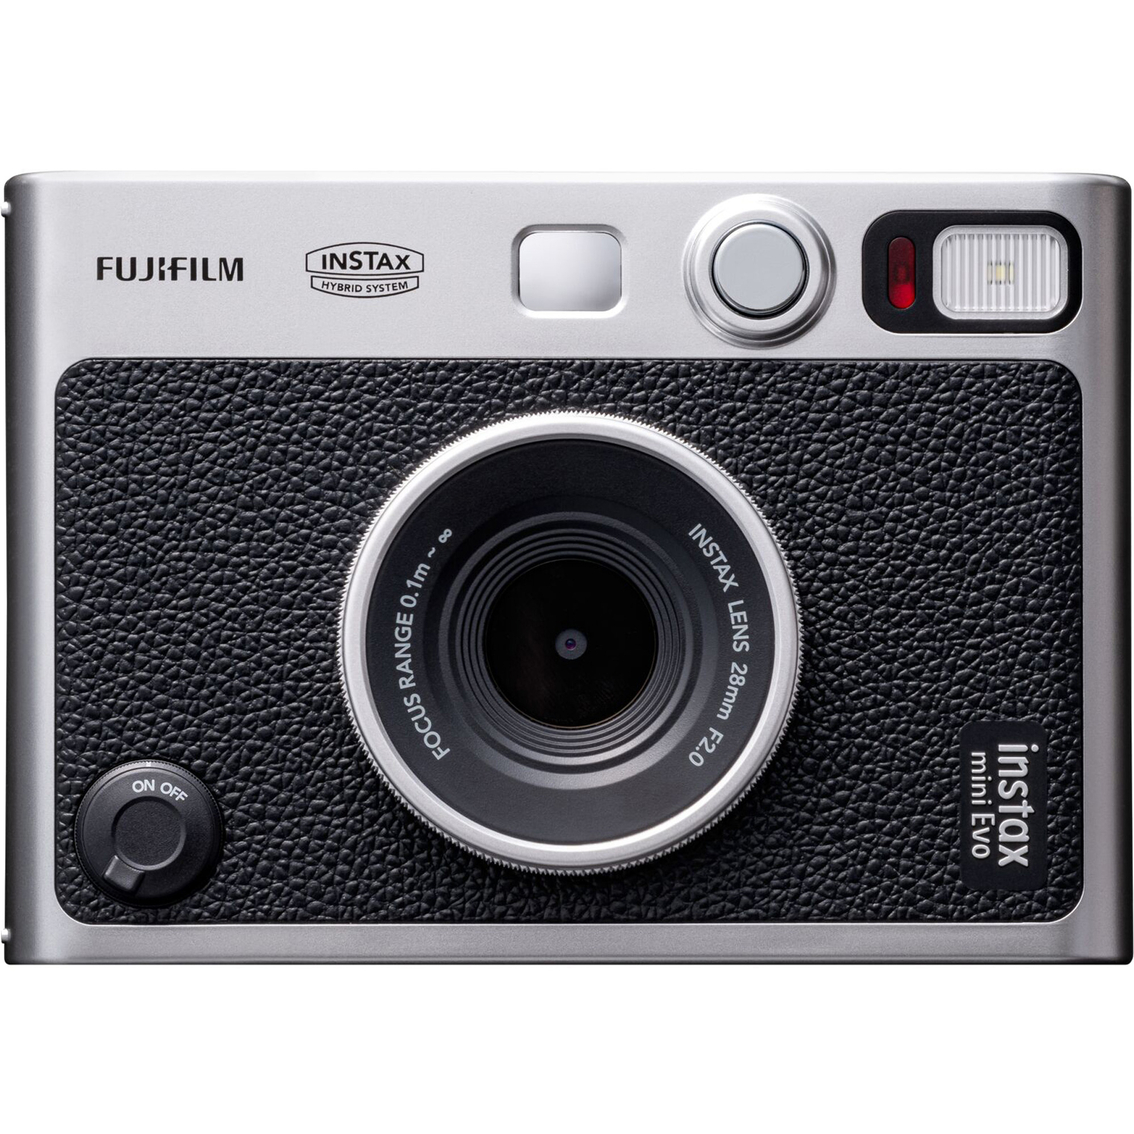 Fujifilm Instax Mini Evo Camera, Black - Image 1 of 7